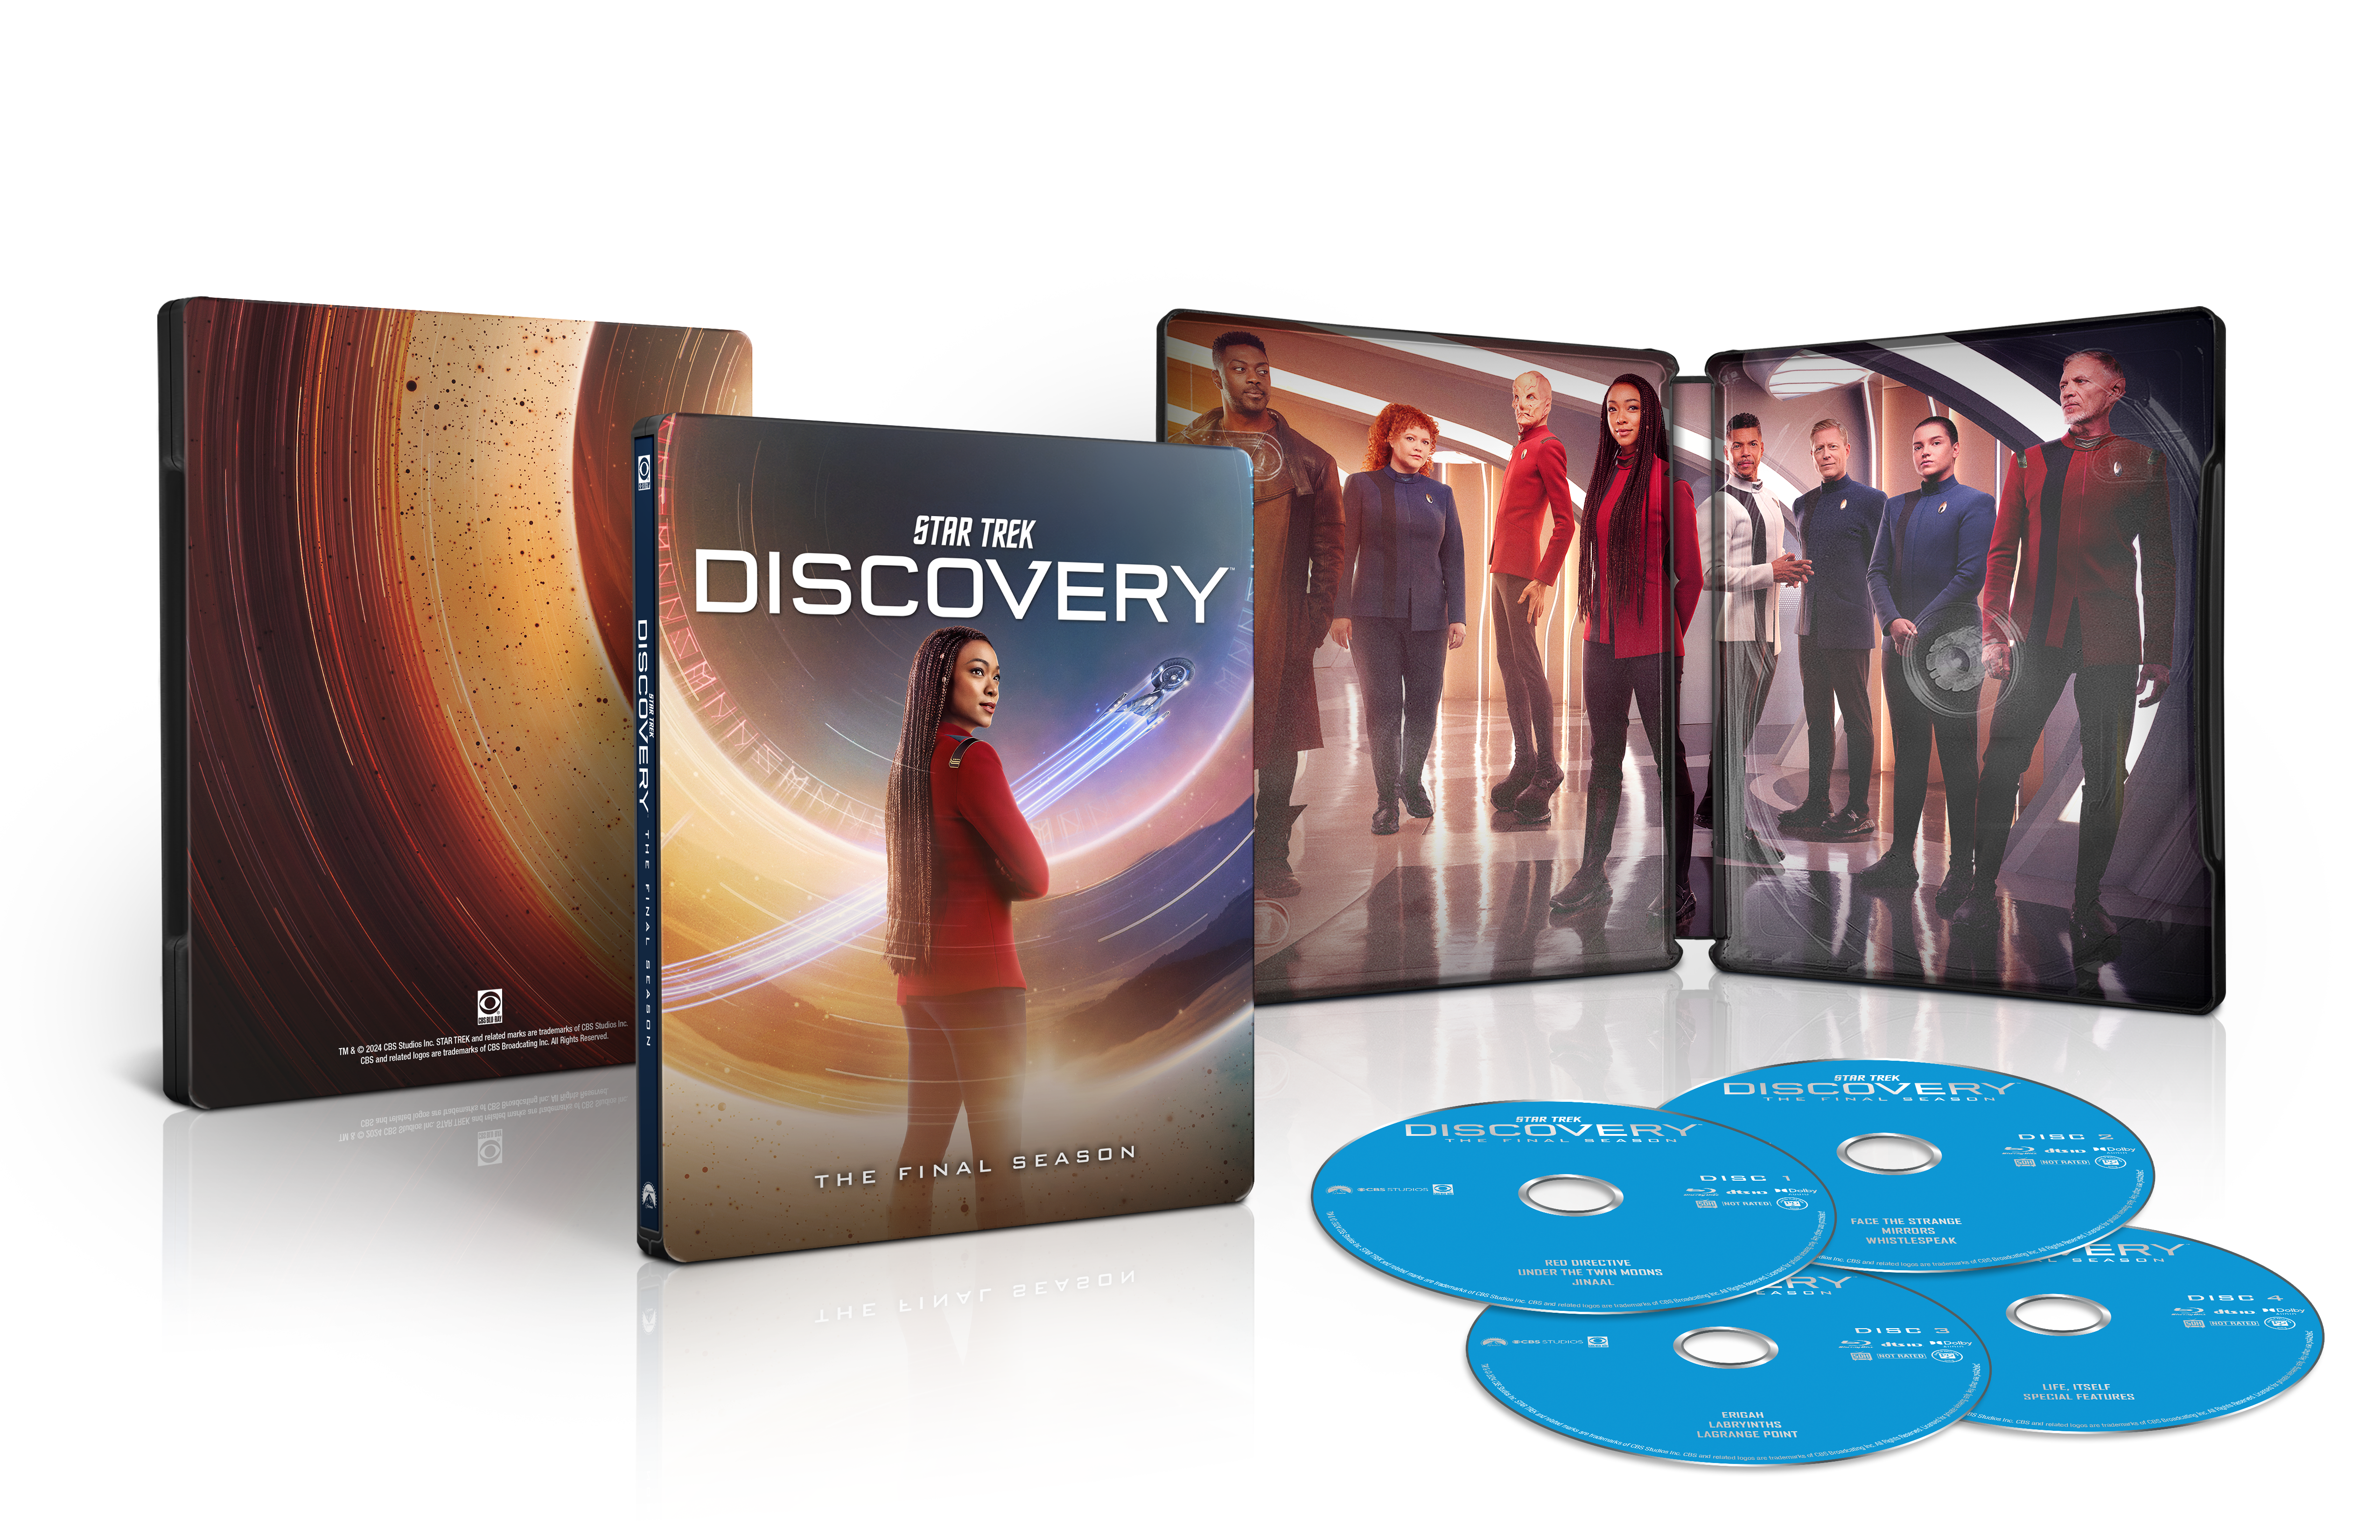 Дата выхода 5-го сезона «Звездного пути: Дискавери» на Blu-ray и DVD установлена ​​вместе с бокс-сетом сериала